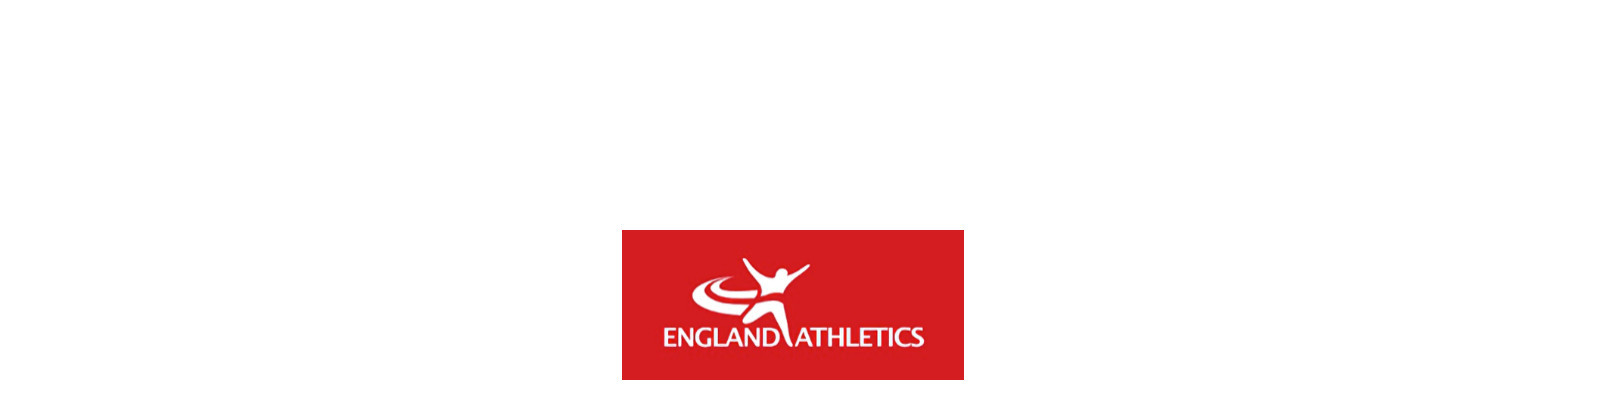 England Athletics